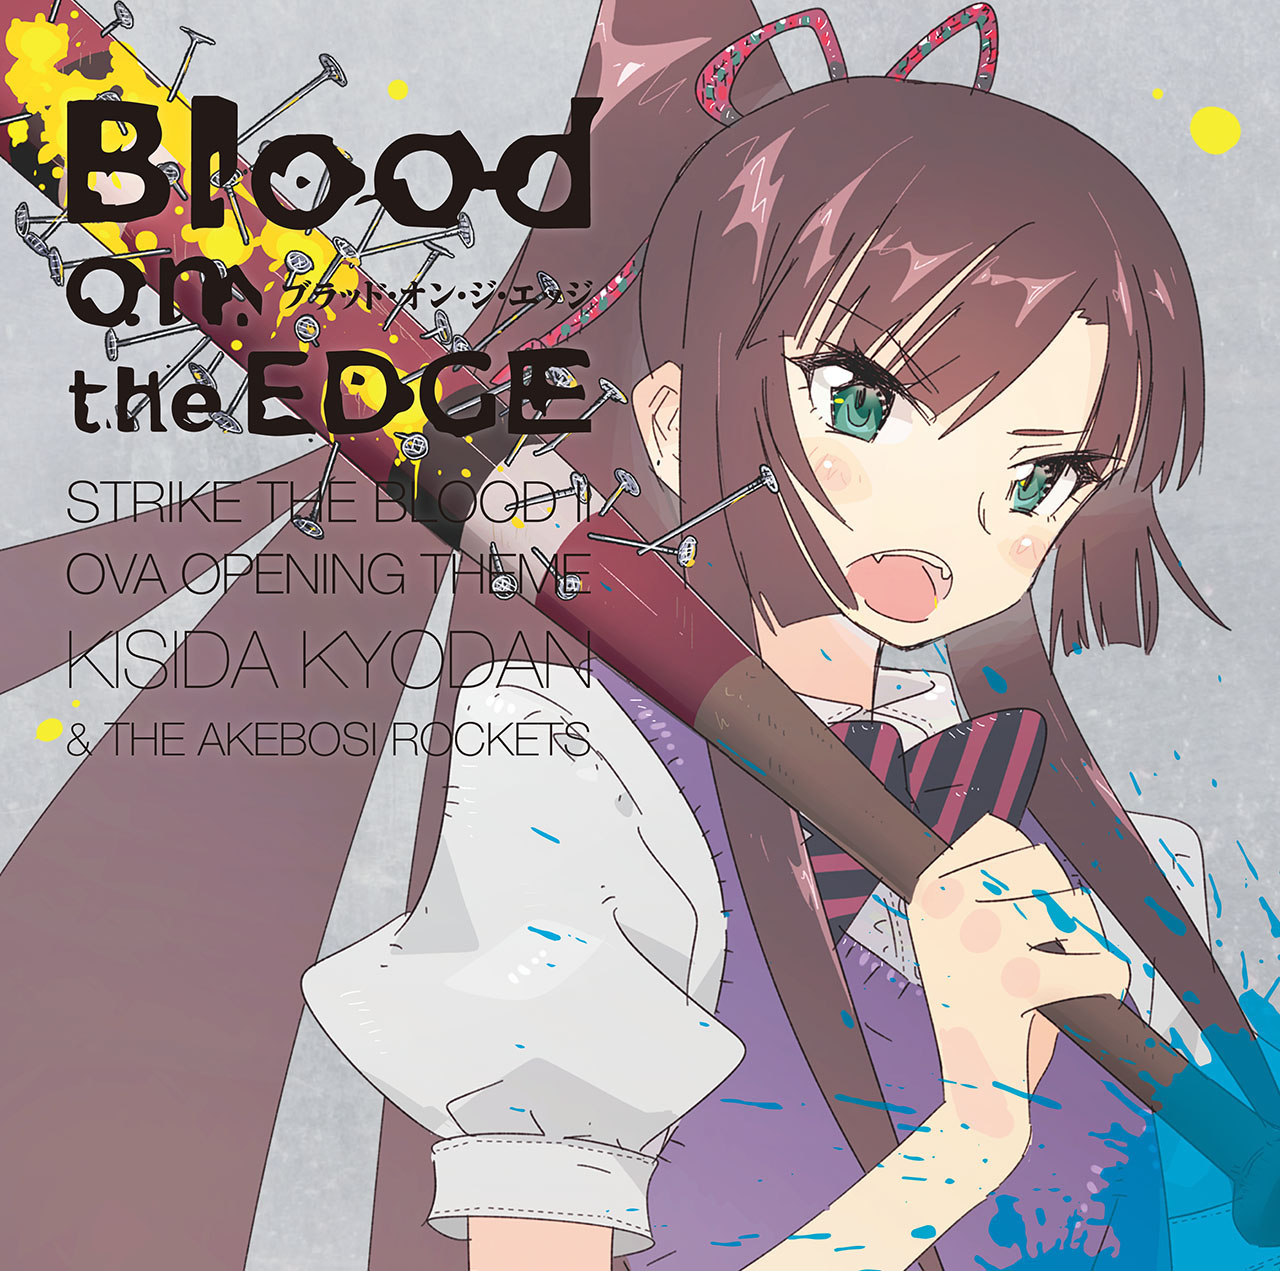 Kishida Kyoudan & The Akeboshi Rockets - Blood on the EDGE